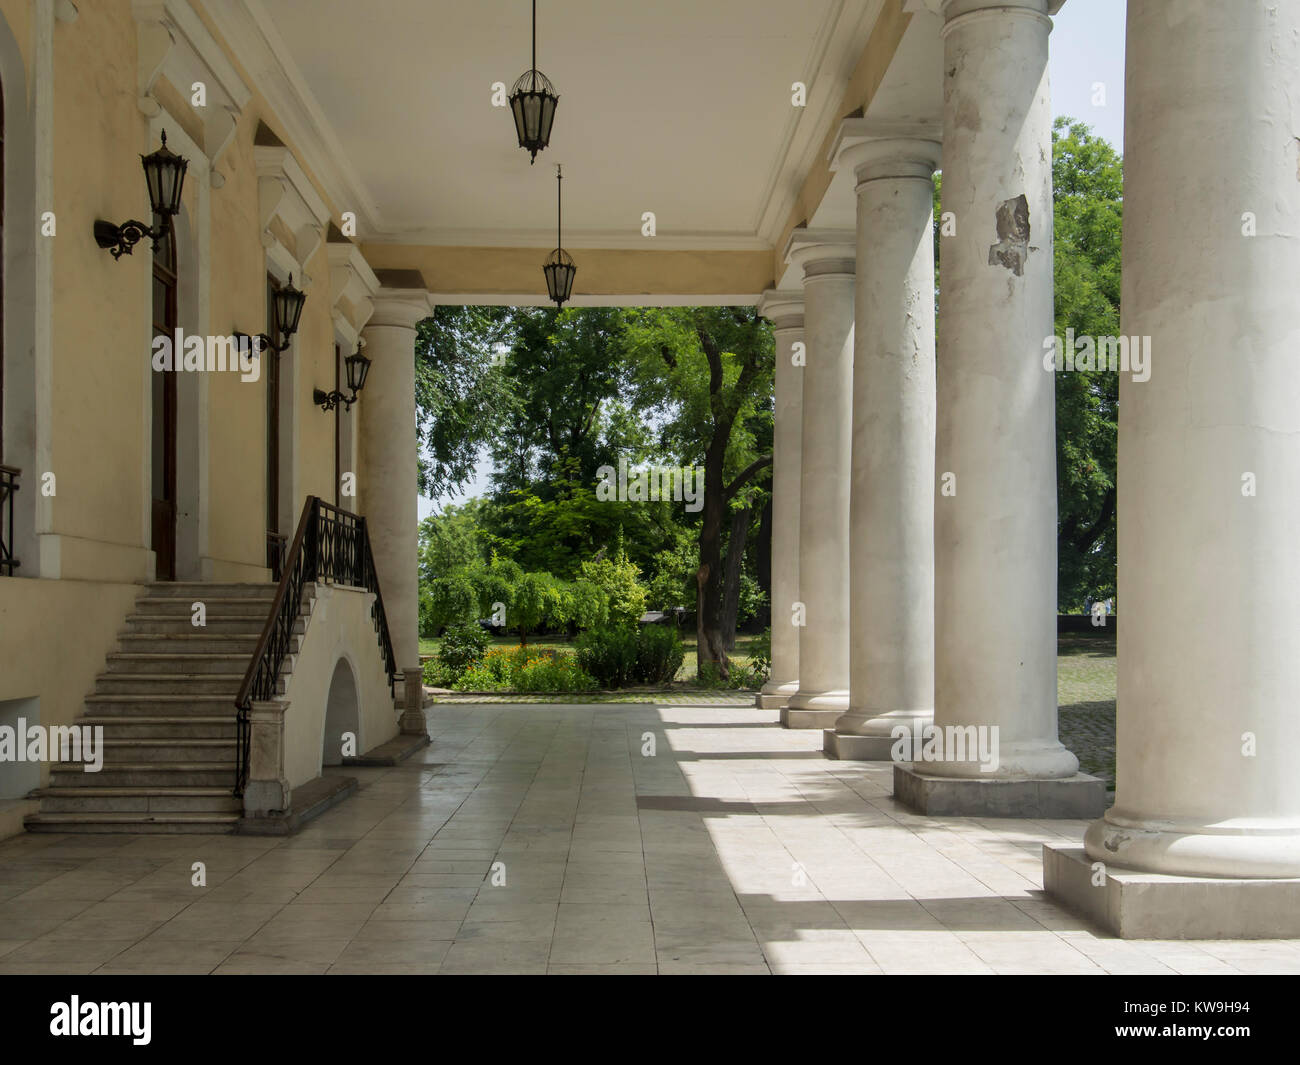 ODESSA, UKRAINE - JUNE 18, 2016: Columns on the Vorontsov Palace Stock Photo